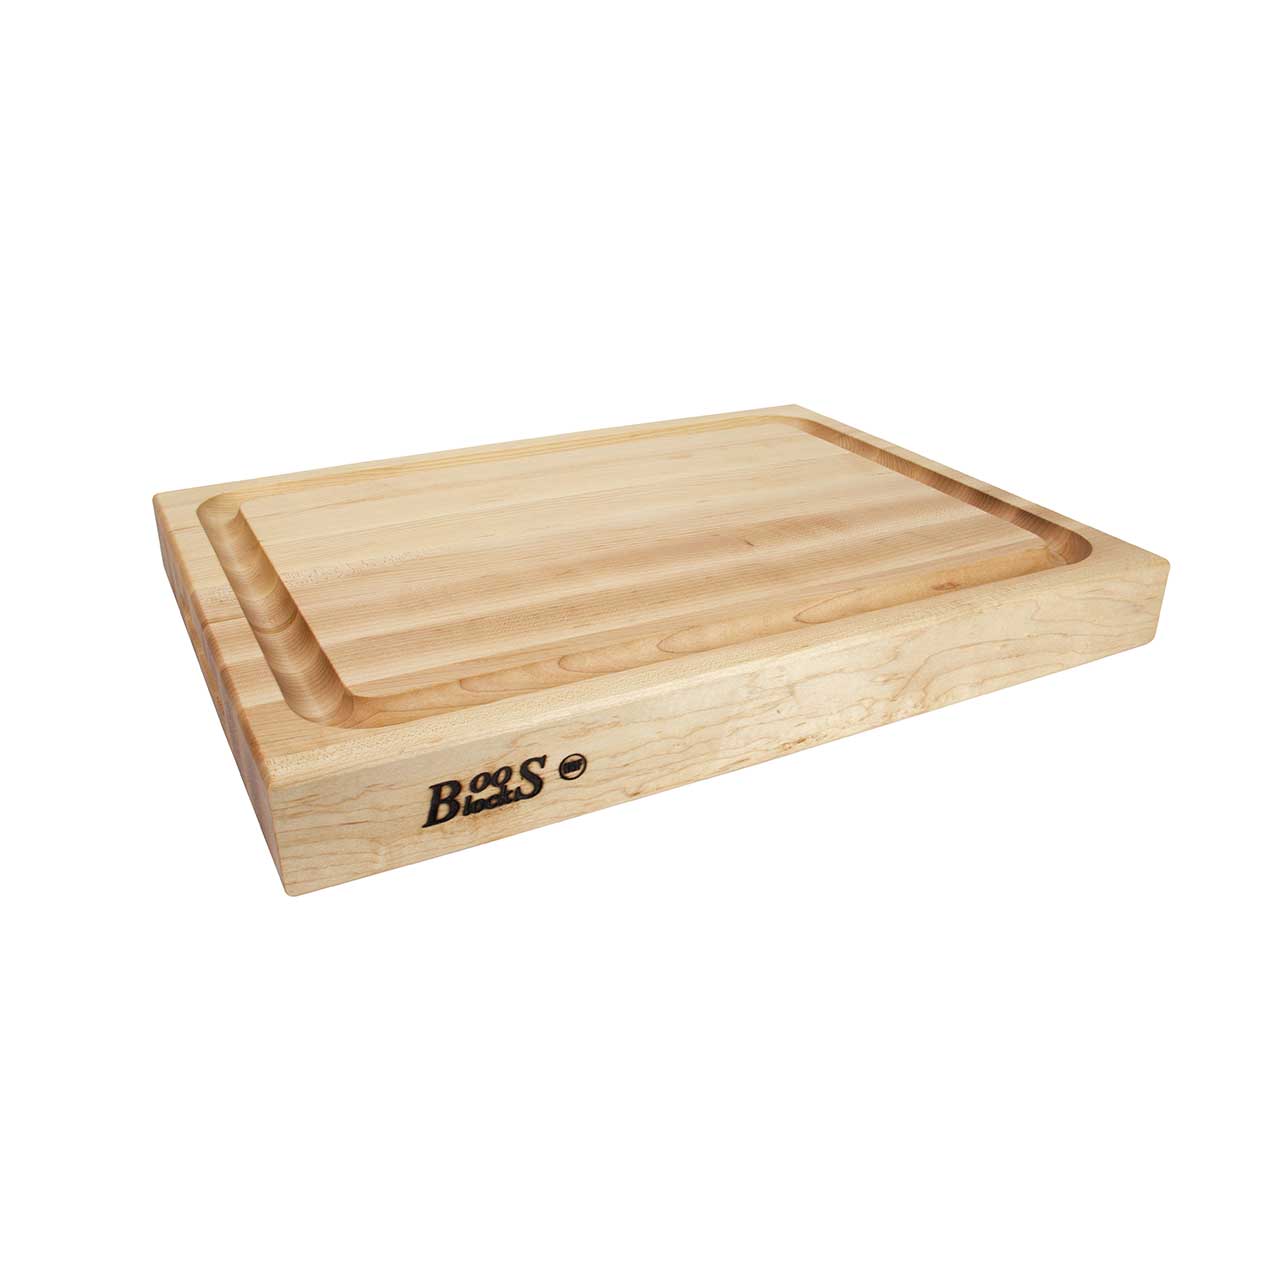 John Boos Reversible Maple Cutting Board, 18 x 12 x 2.25